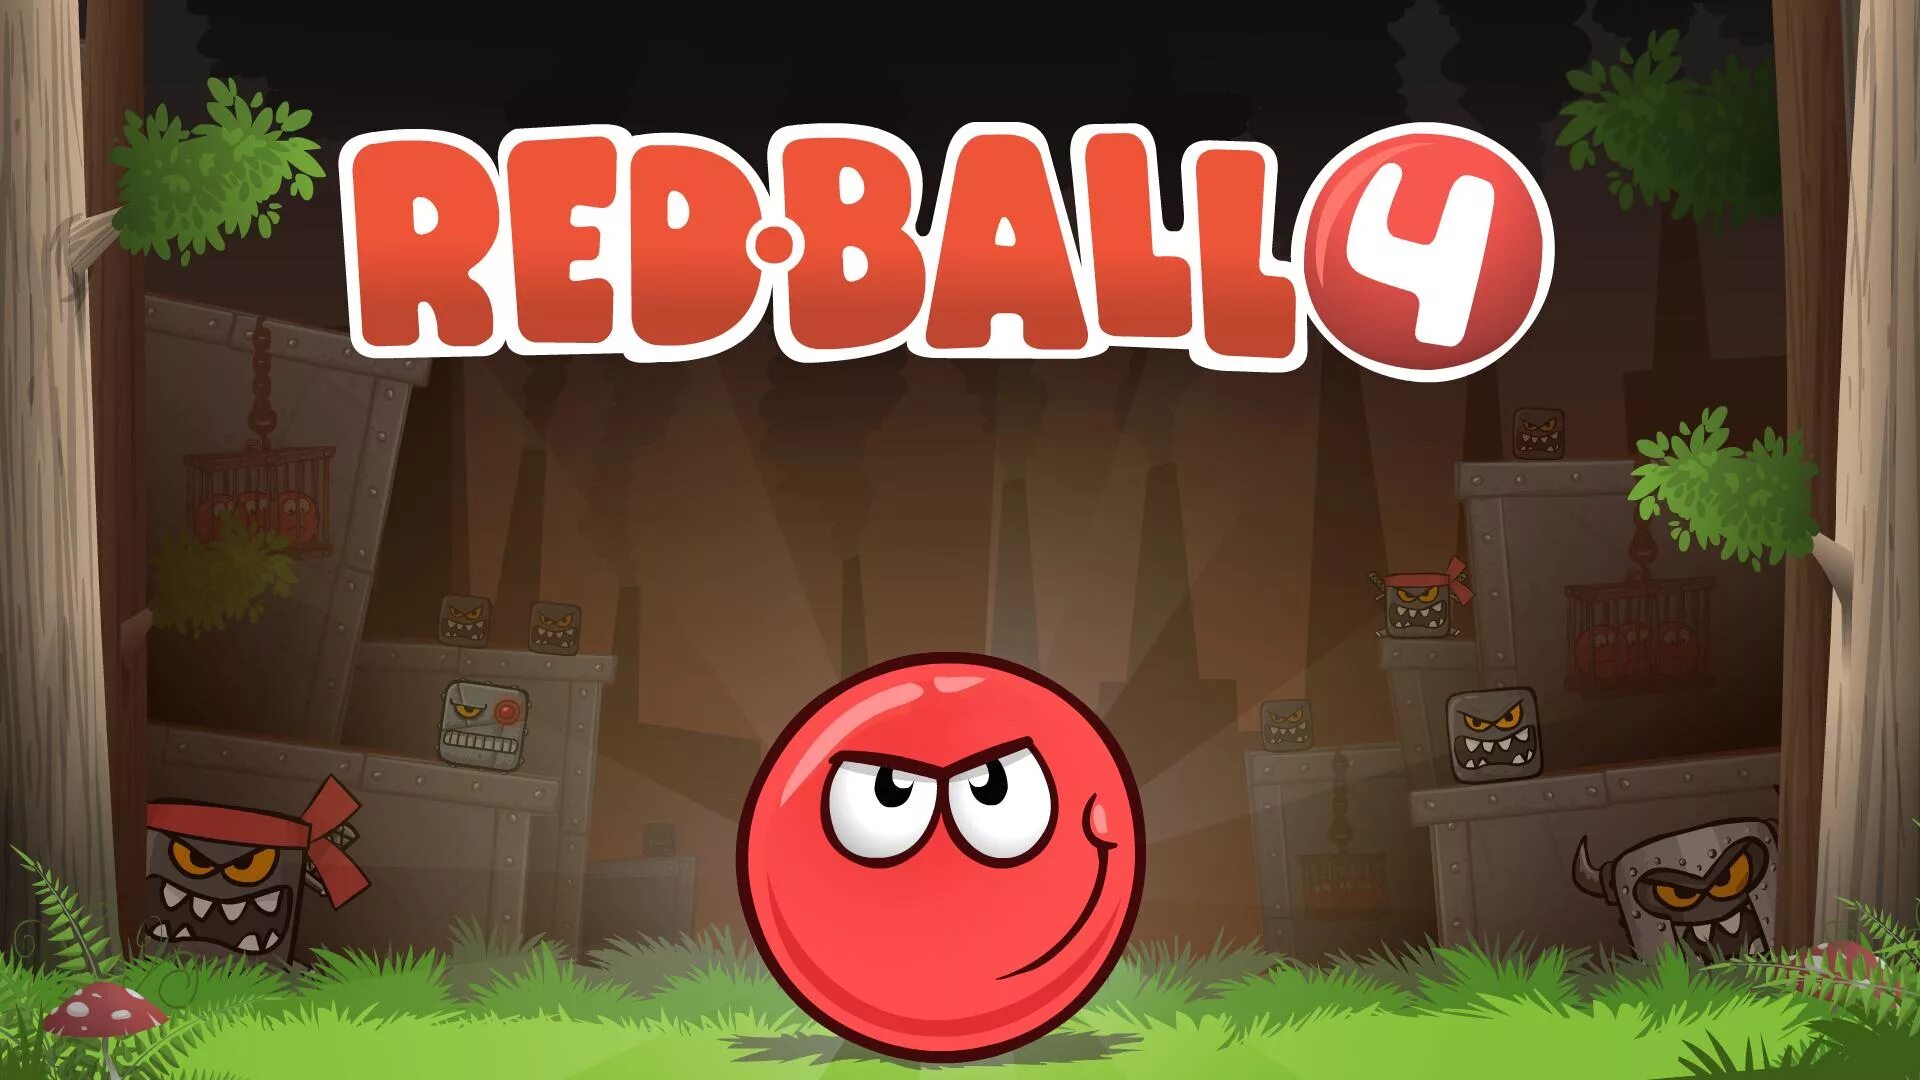 Redball. Игра Red Ball. Красный шарик Red Ball игра. Игра ред бол 4. Игра красный шар 4.